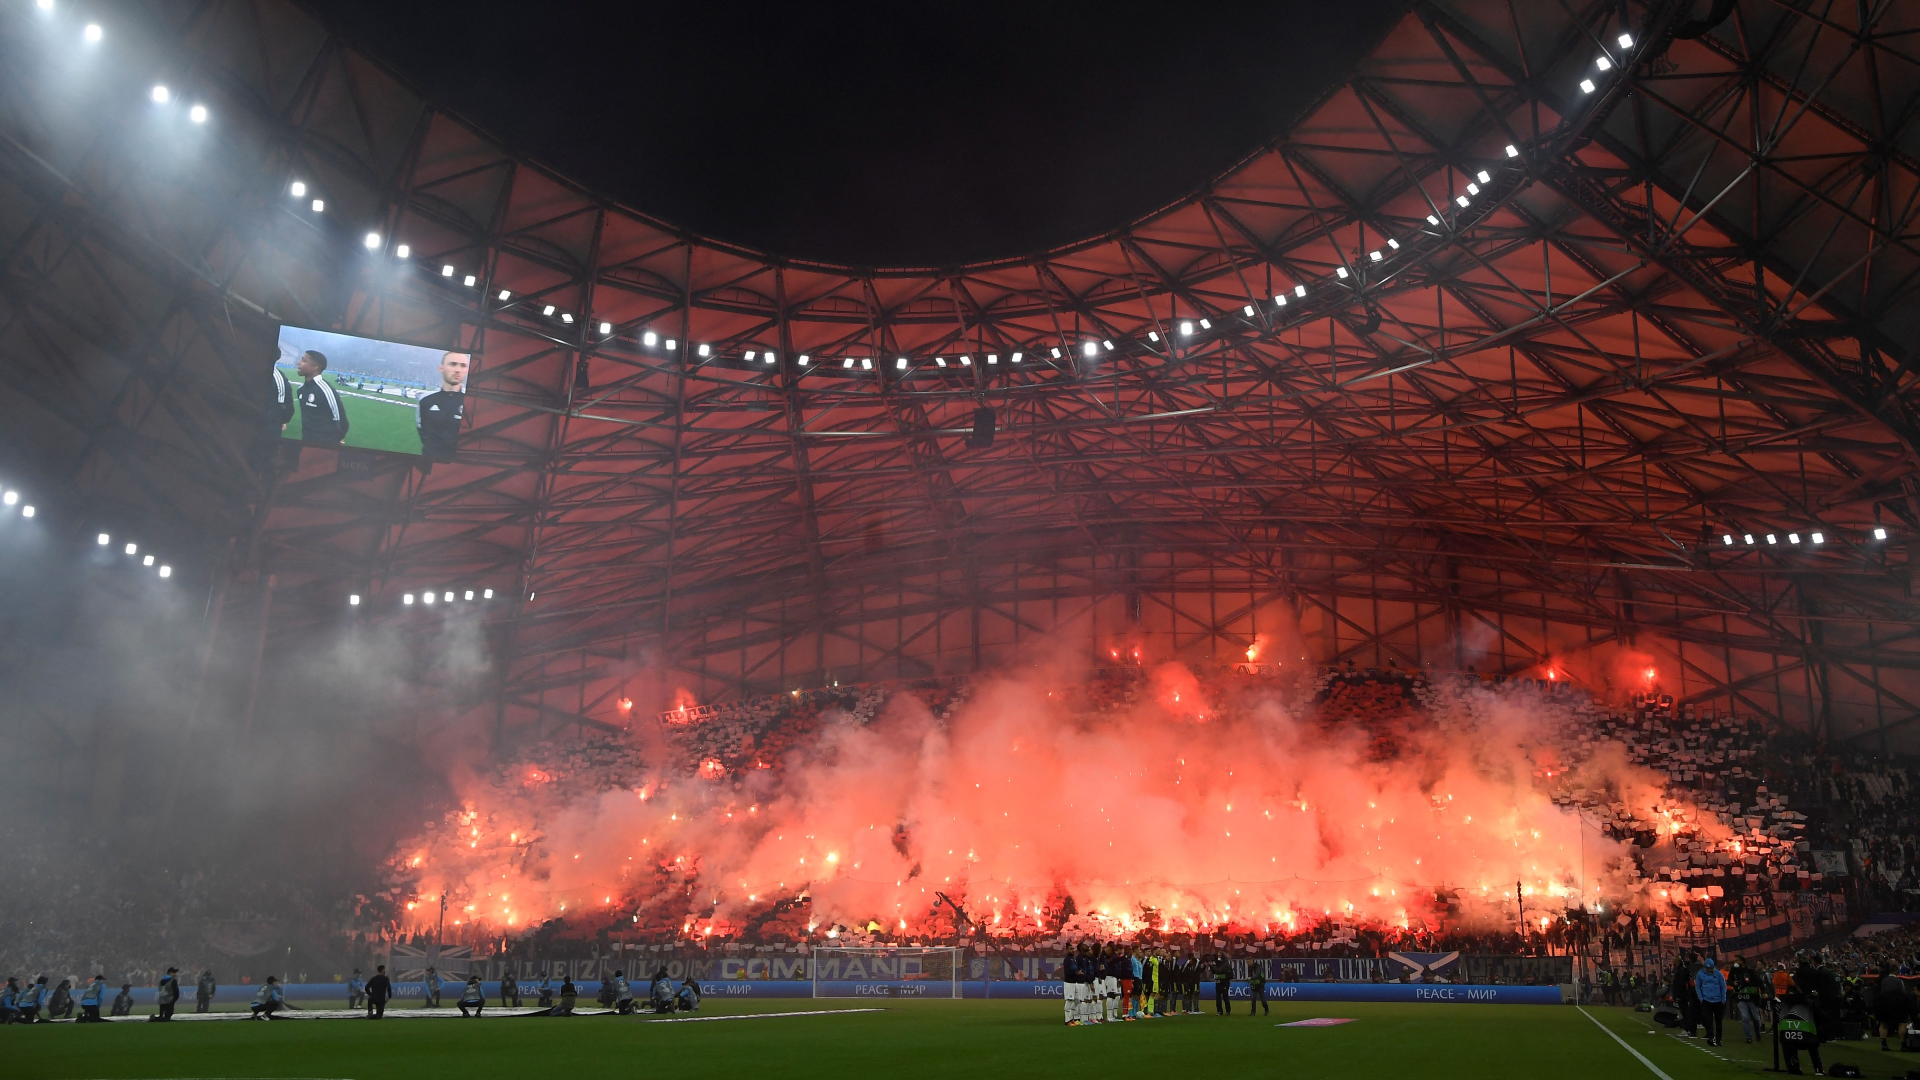 Les fumigènes bientôt autorisés dans les stades en France